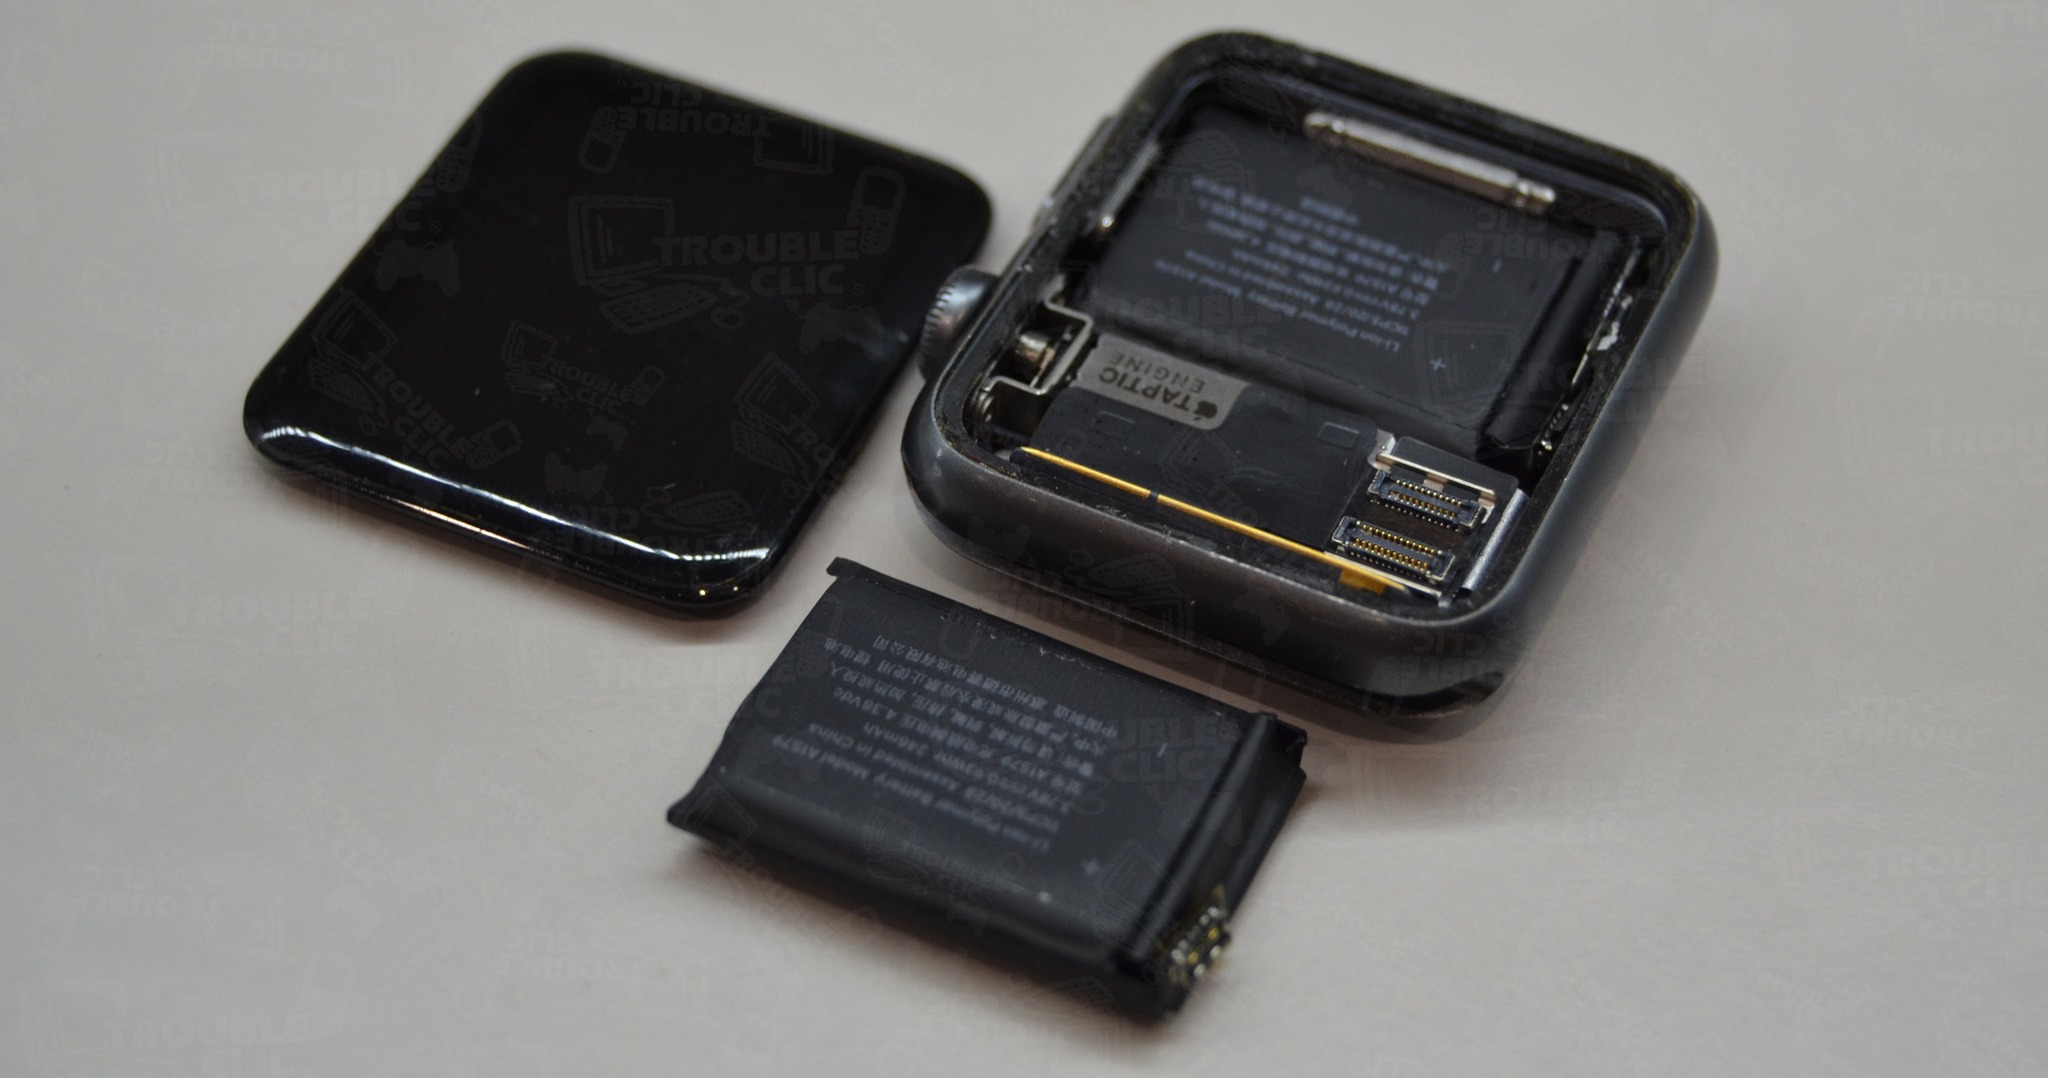 Neuf Batterie Pour Samsung Galaxy Watch 4 Classique SM-R870 R875 SM-R890  44mm